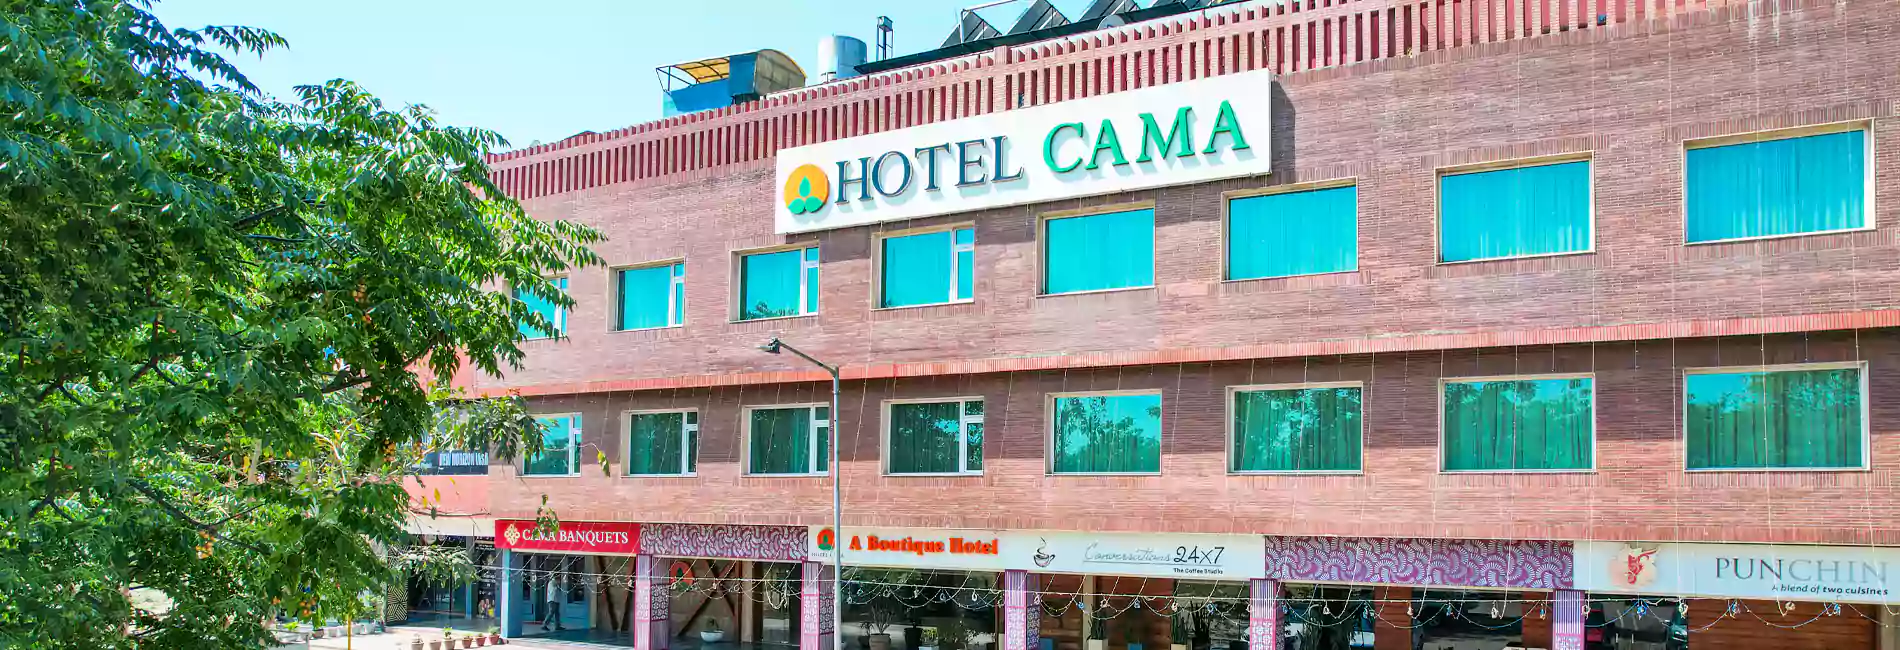 Three Star Hotel in Mohali near Chandigarh Hotel Cama